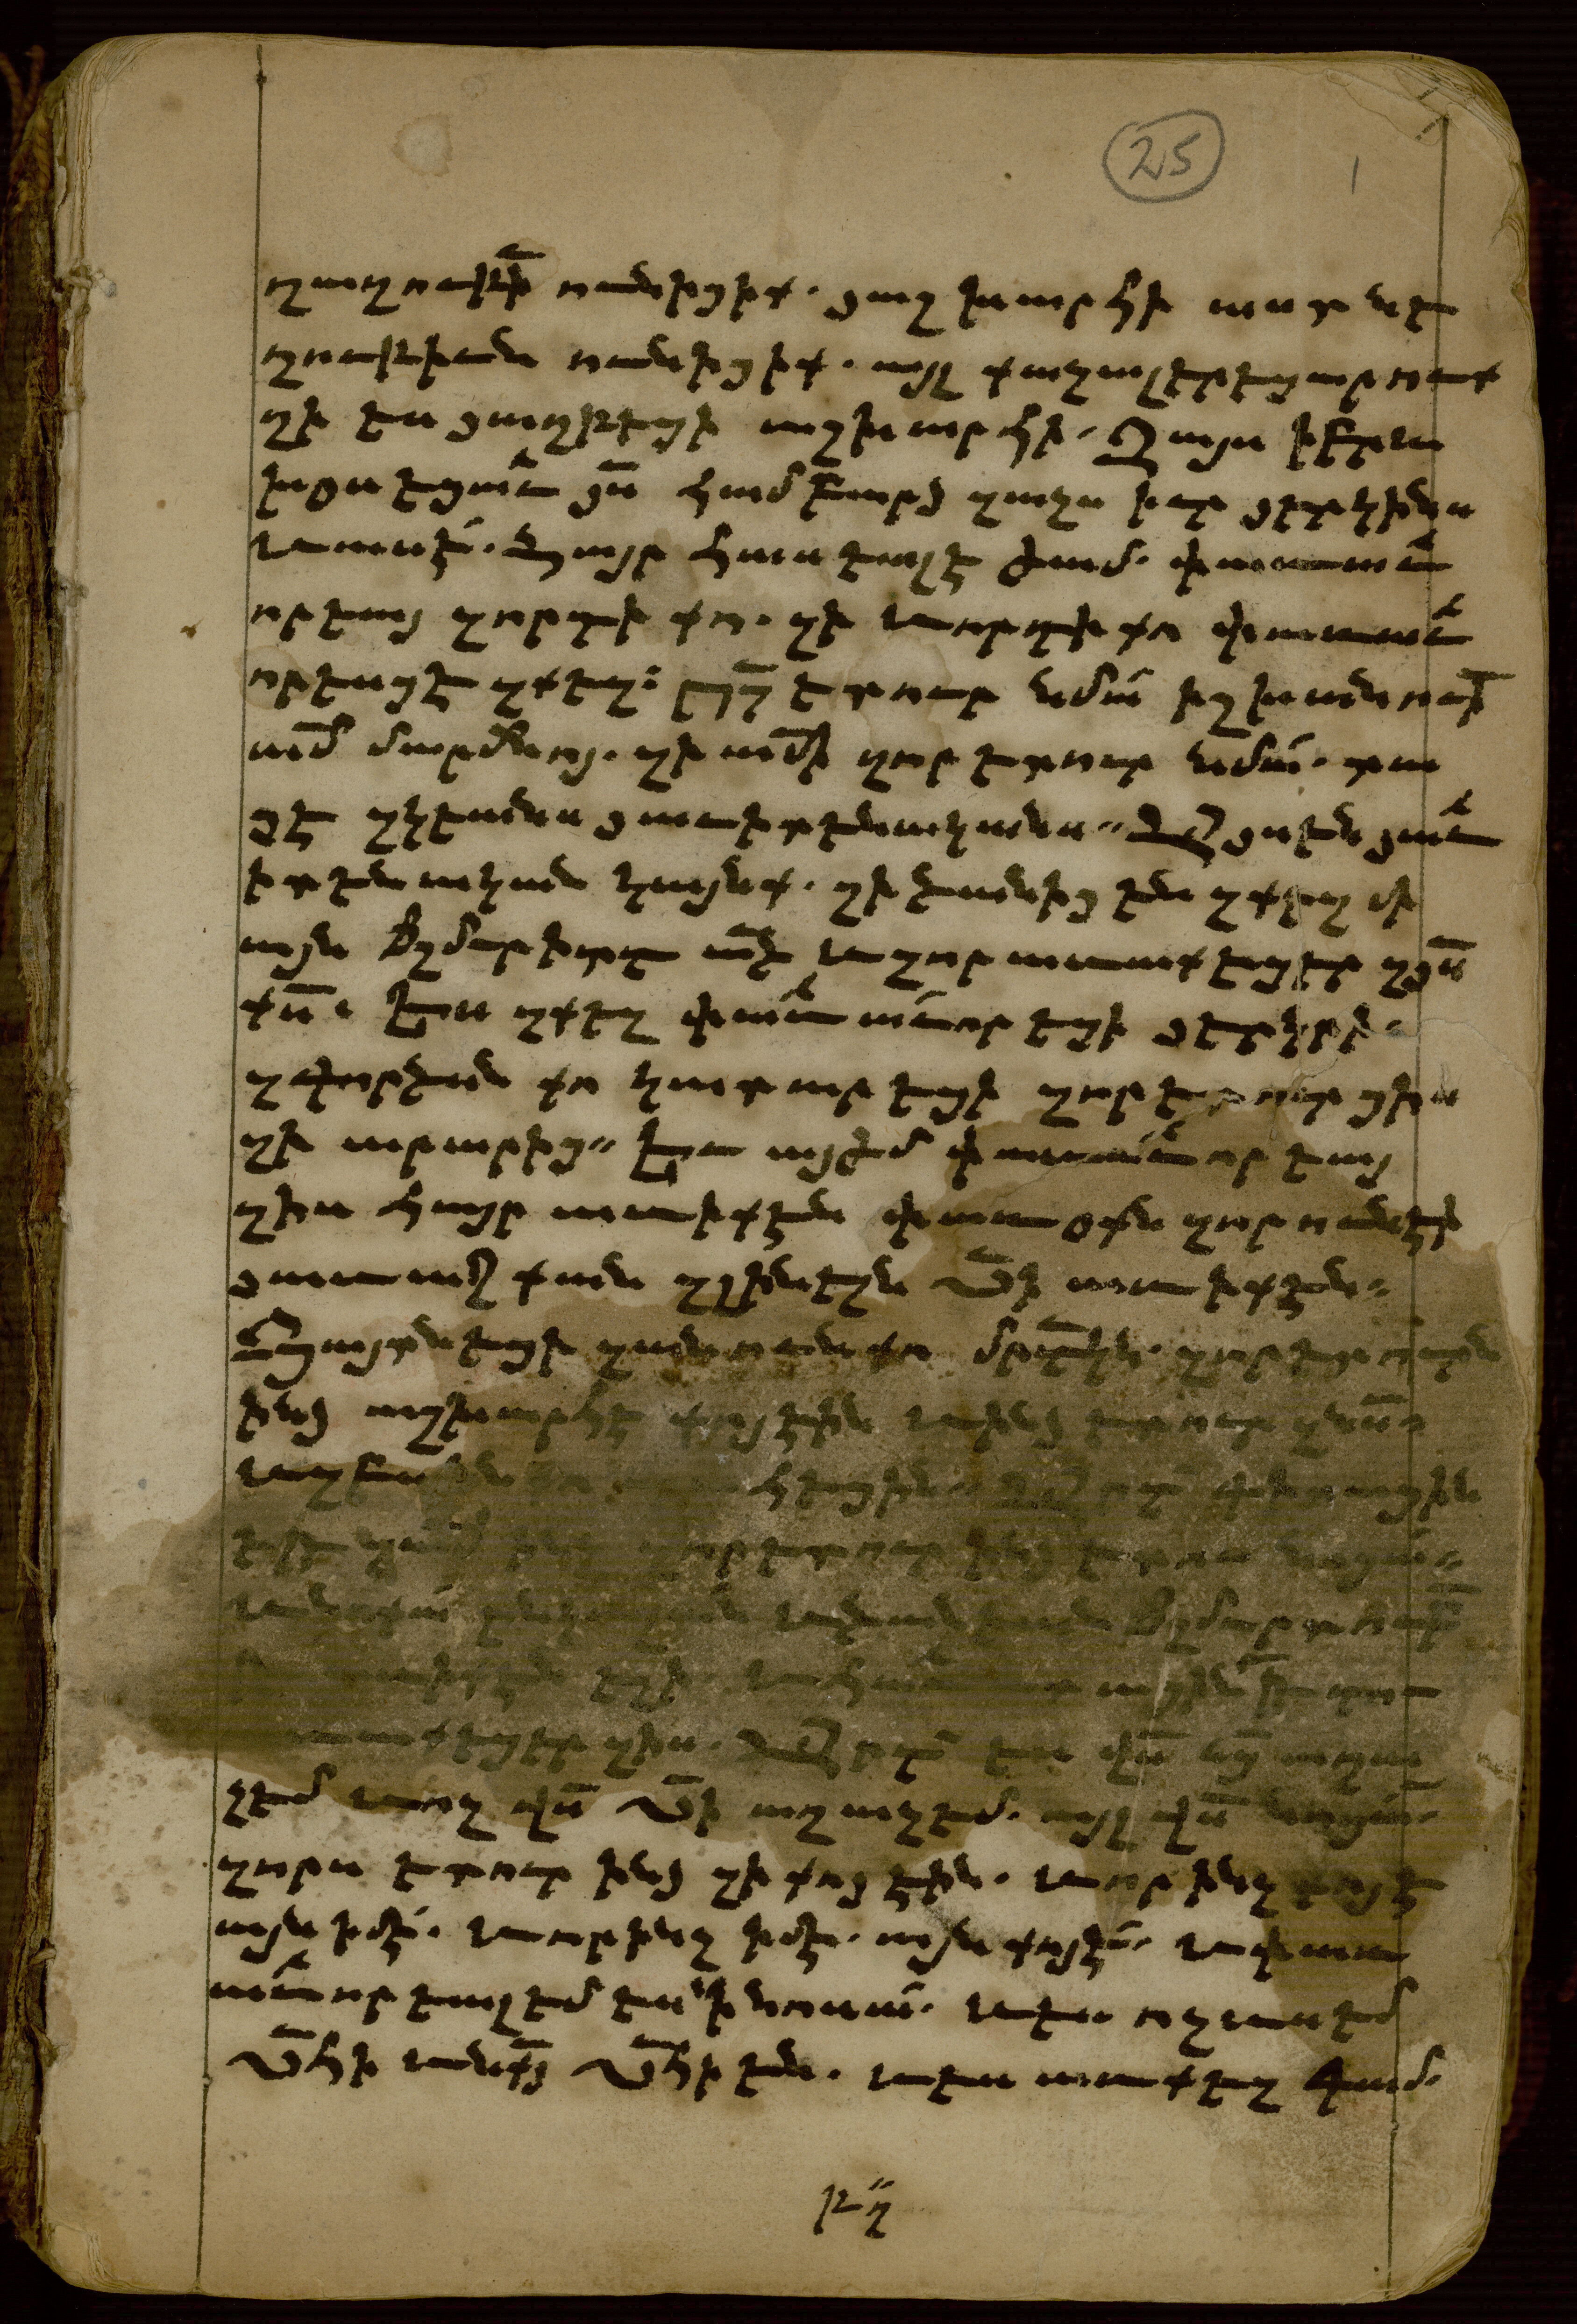 Manuscript No. 25: Ritual Book